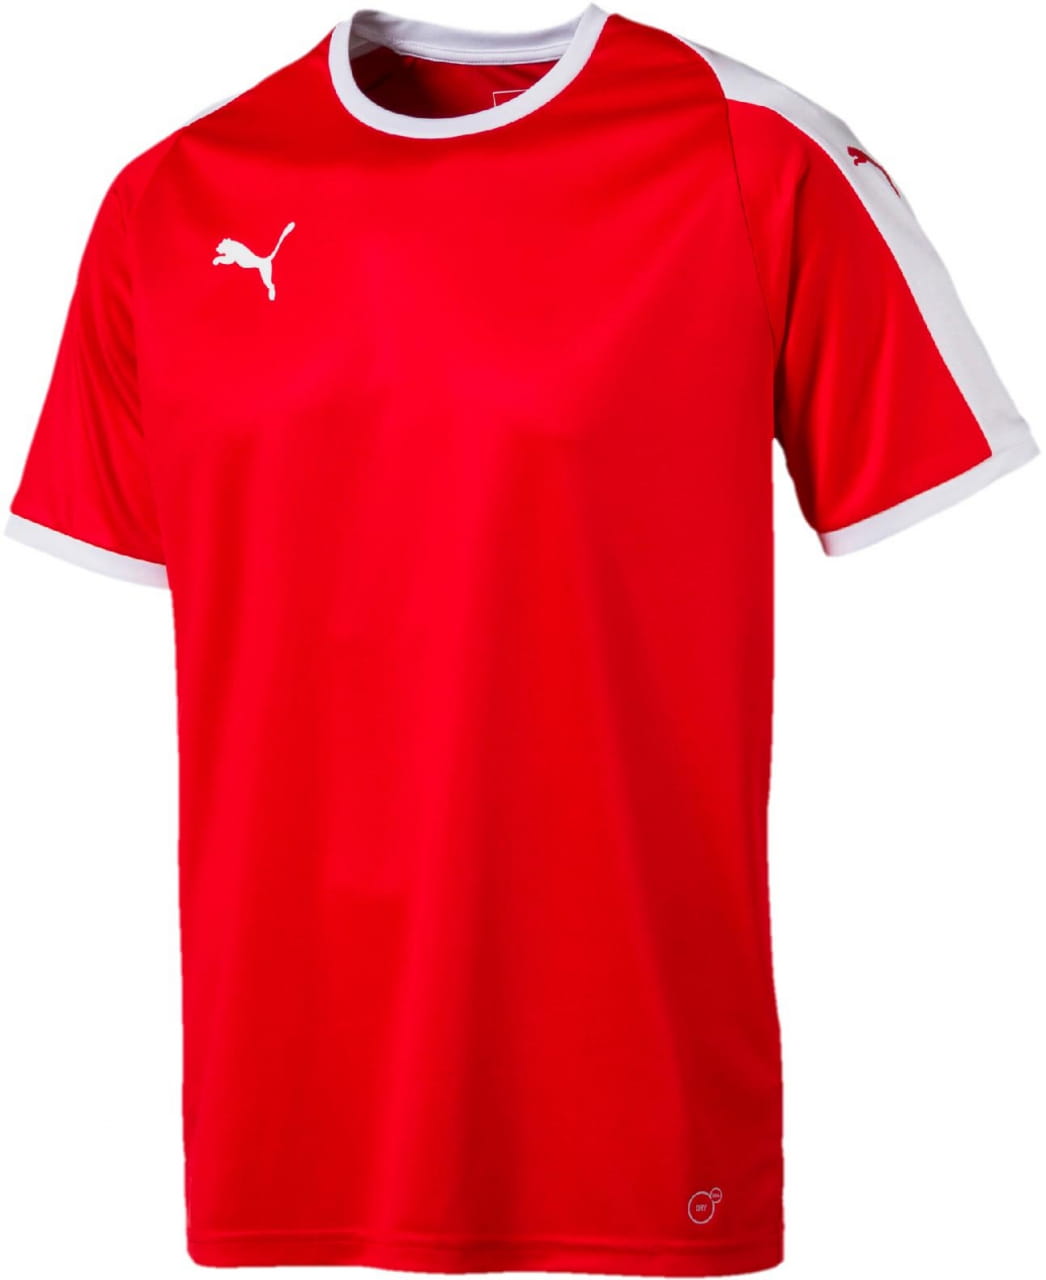 Pánske športové tričko Puma LIGA Jersey